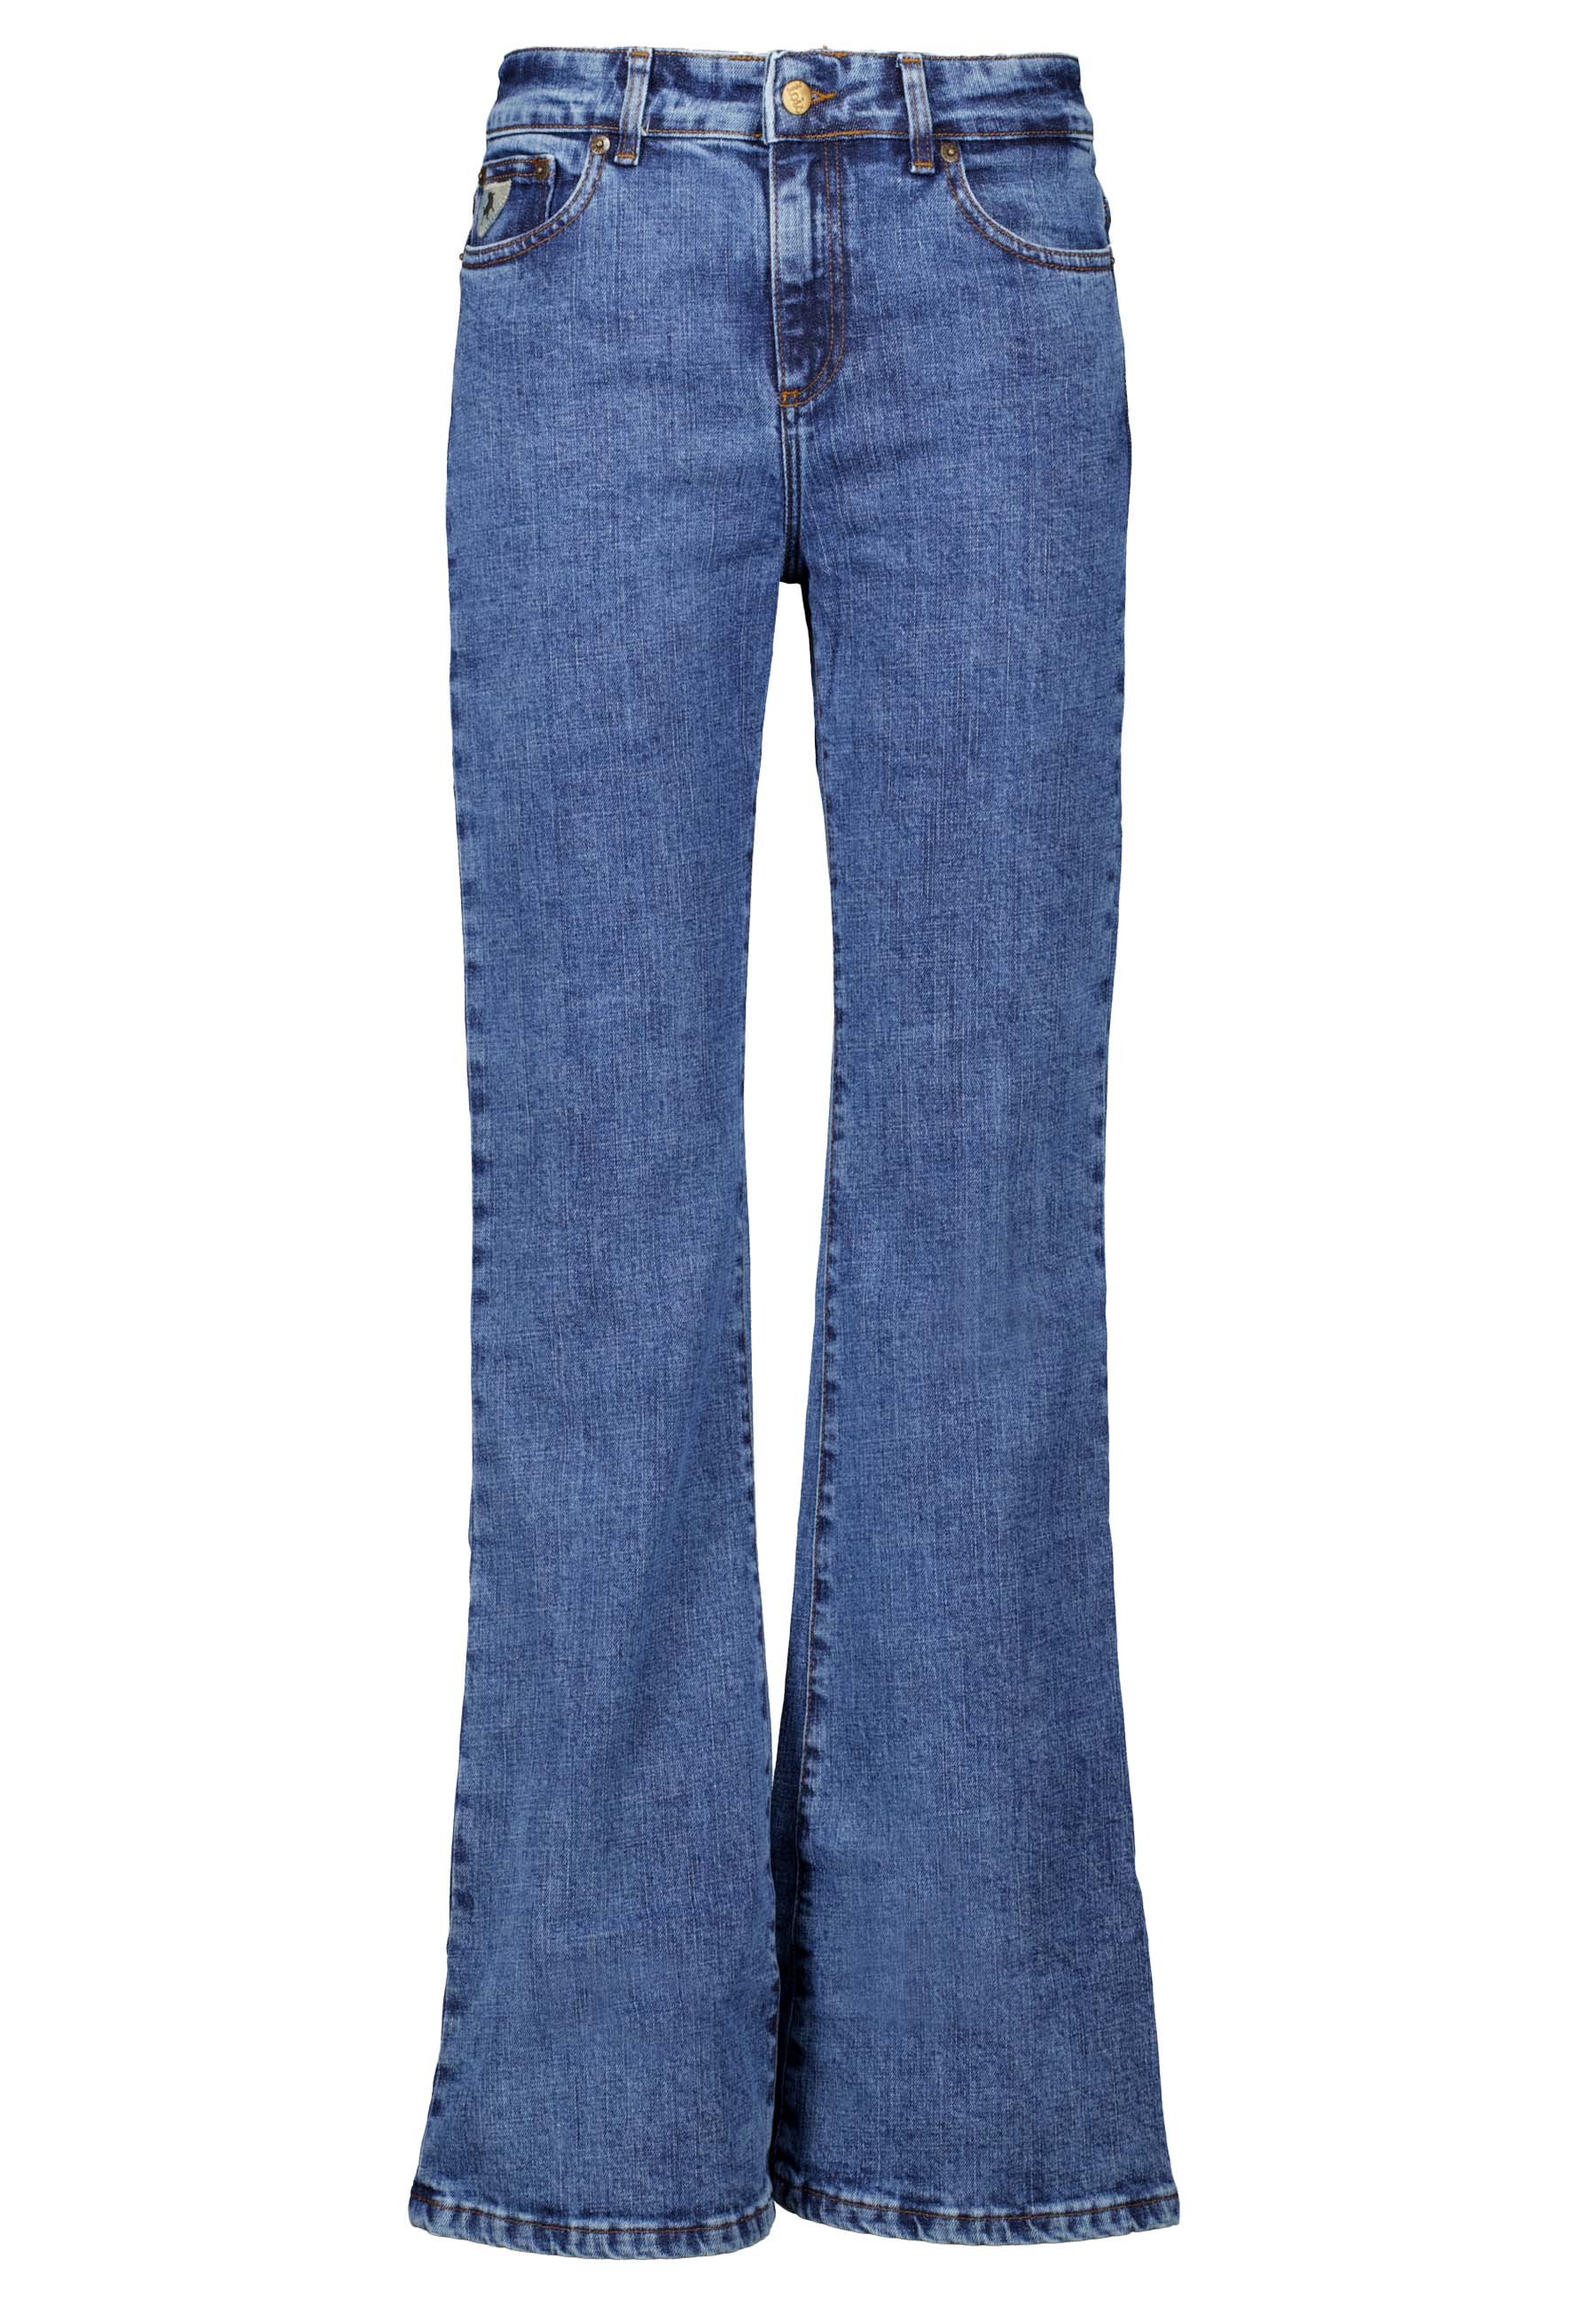 Lois Raval comfy jeans blauw Dames maat 30/32